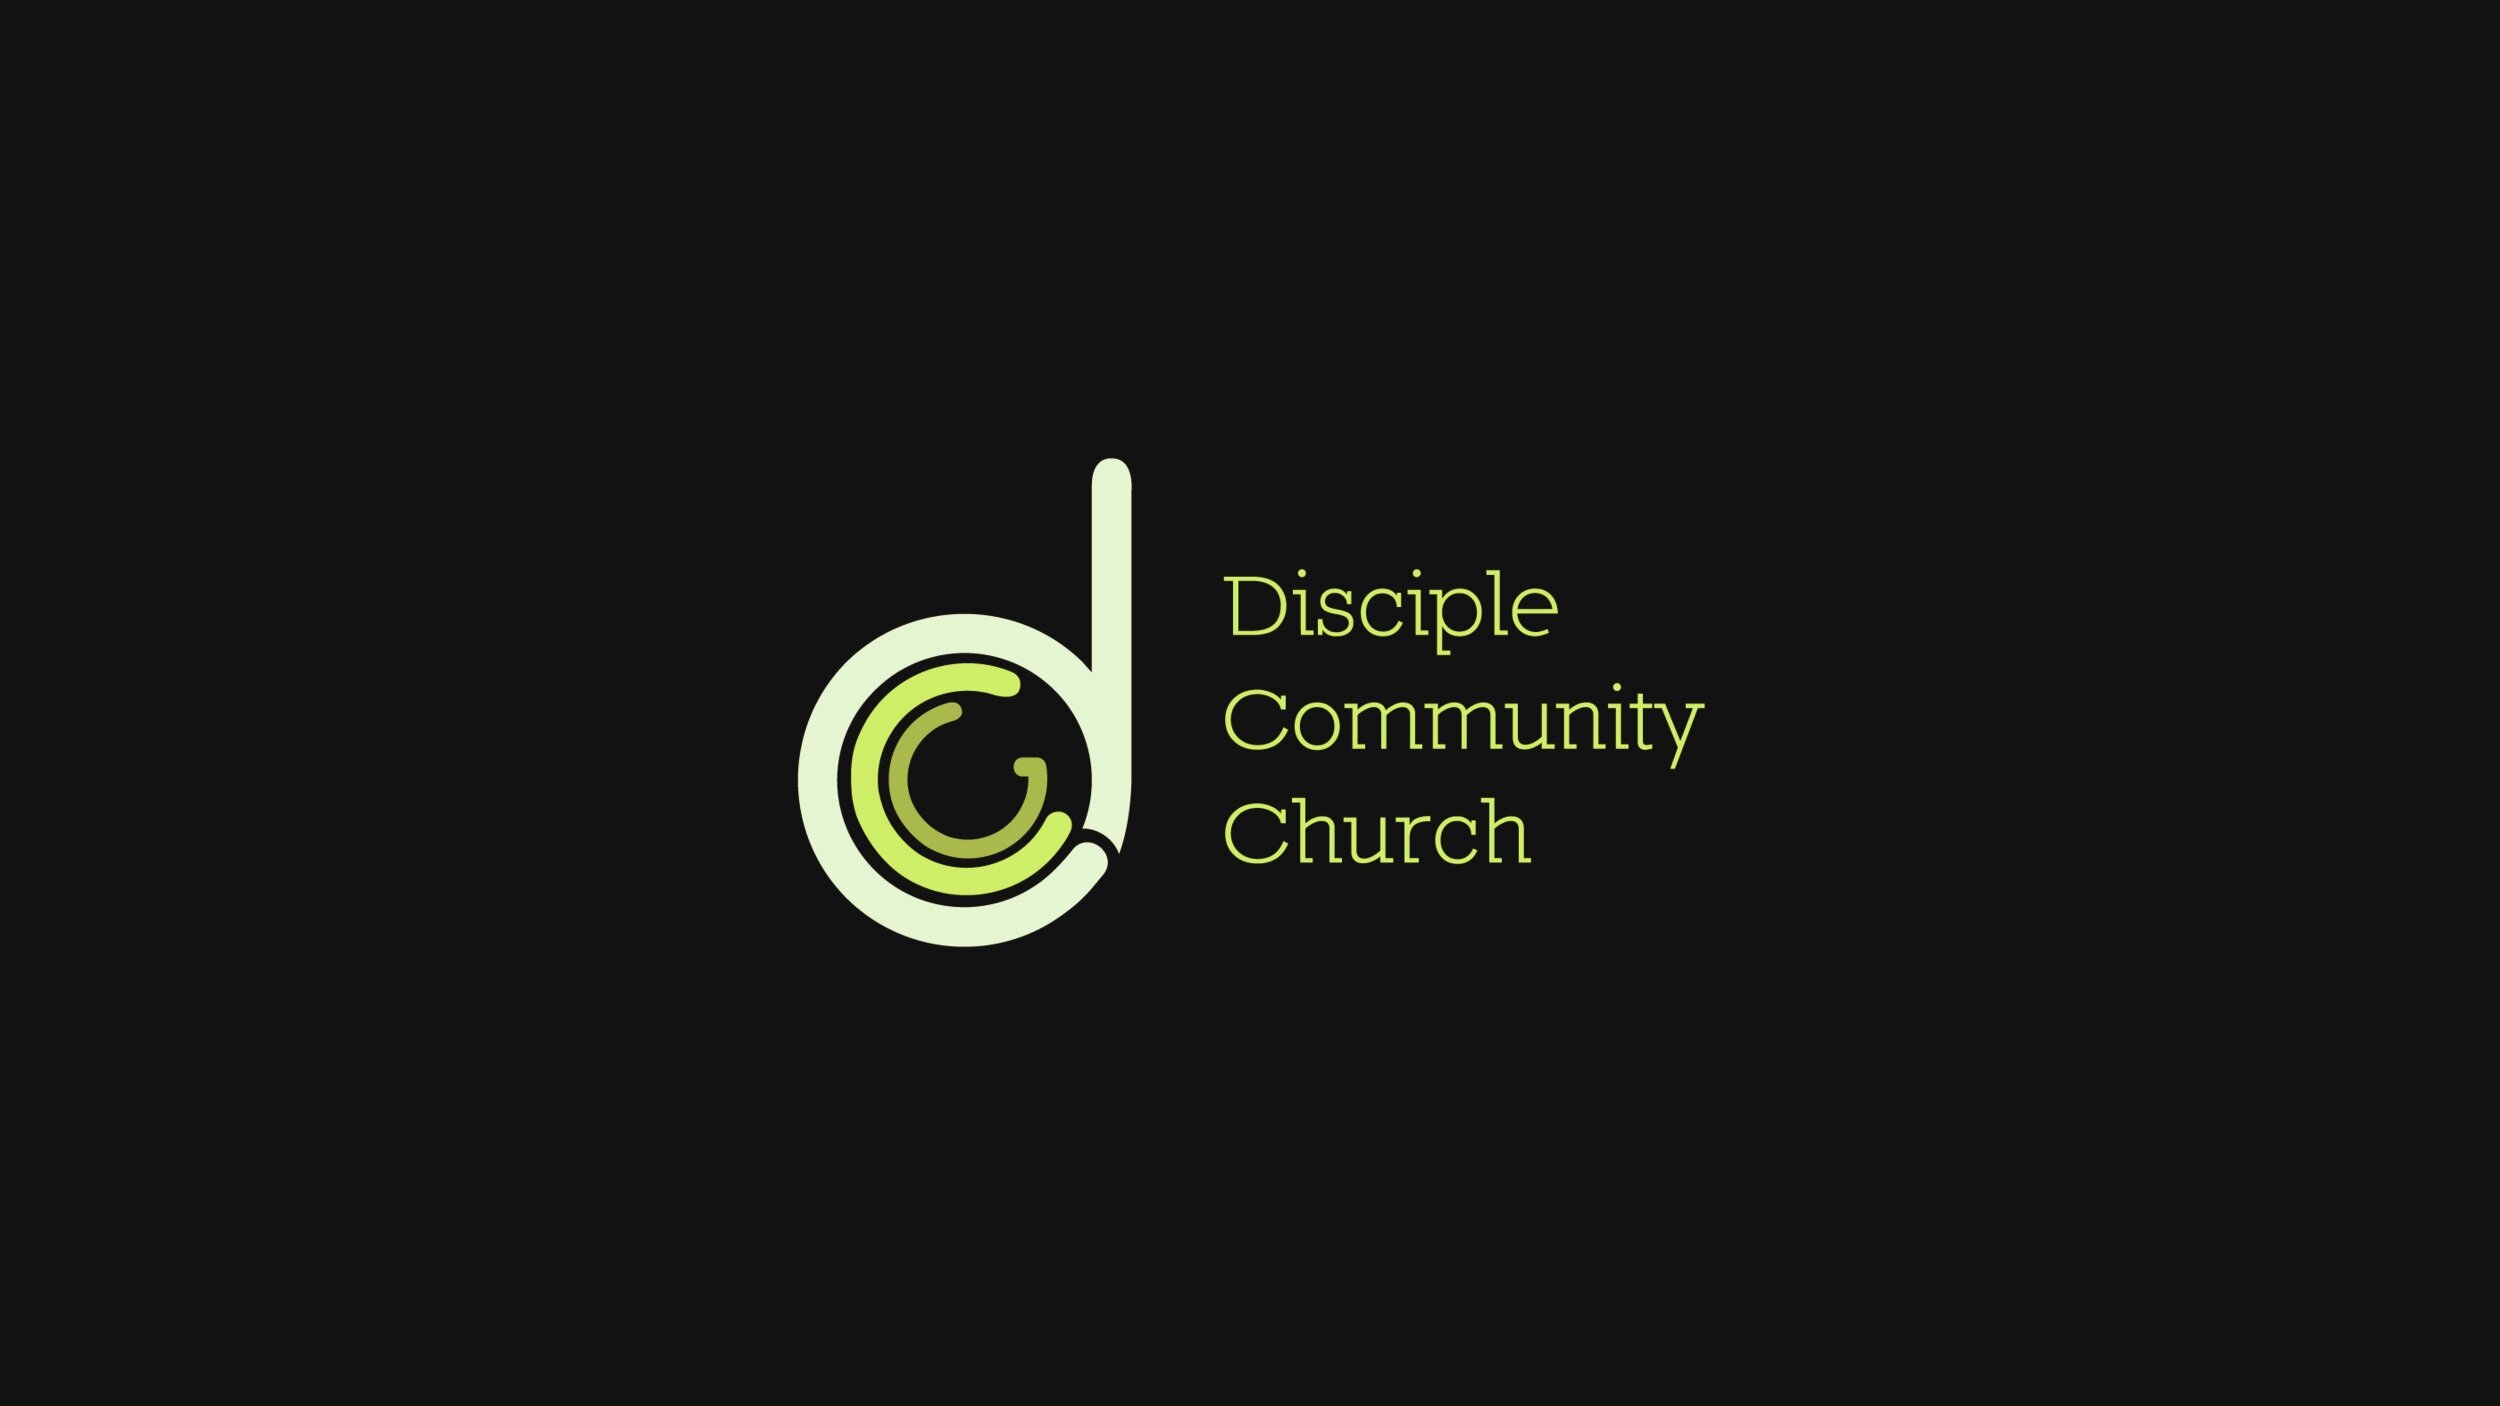 Disciple Community Church